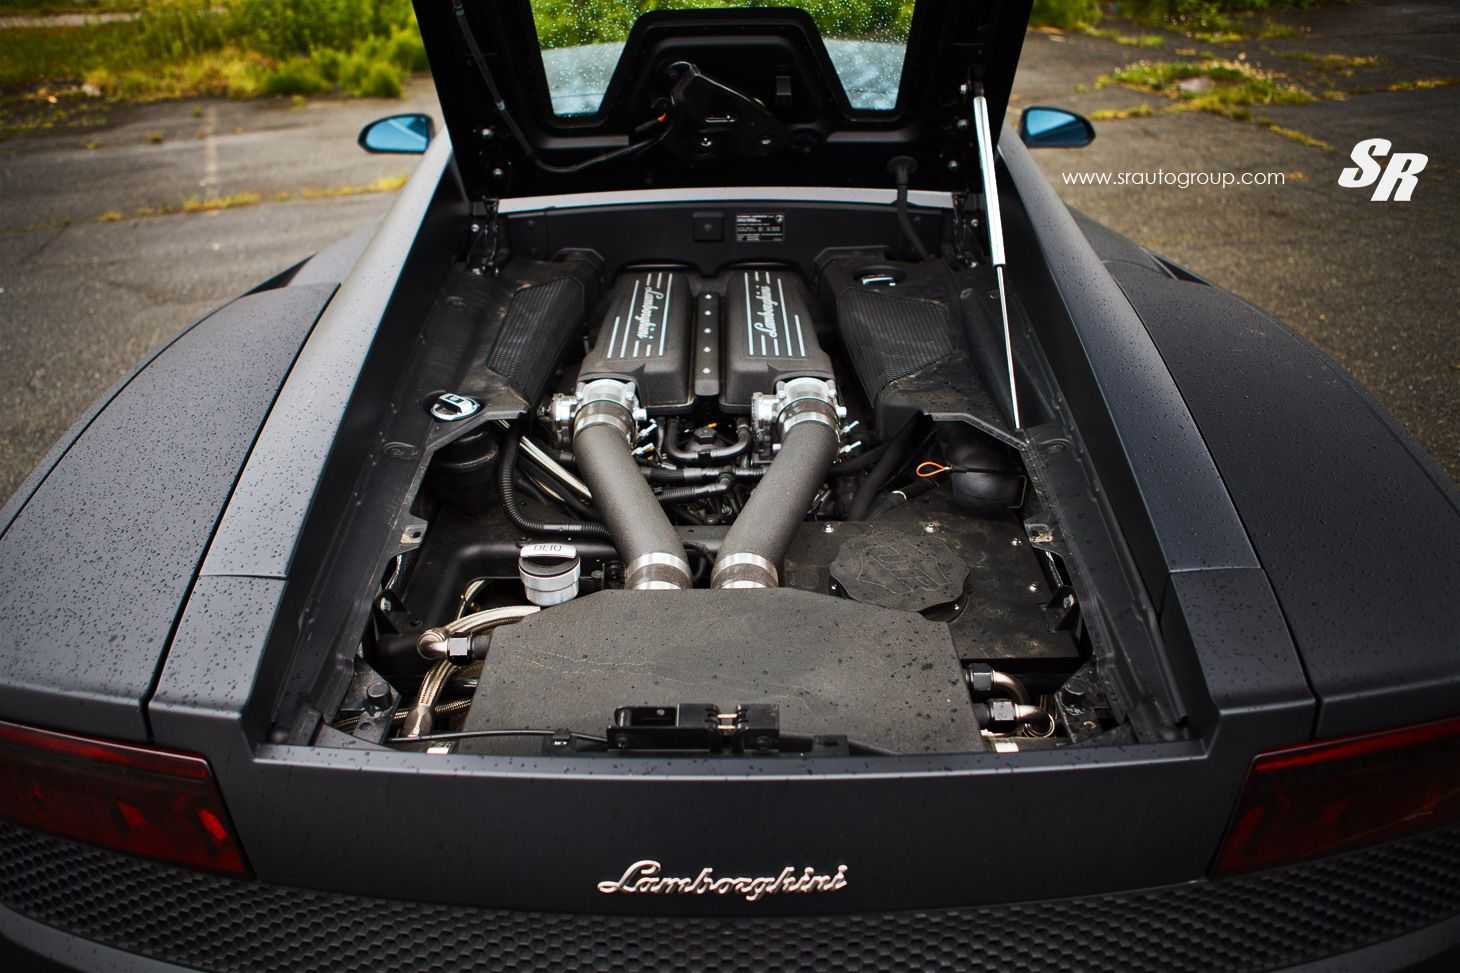 2013 Lamborghini Gallardo by Underground Racing and SR Auto Group